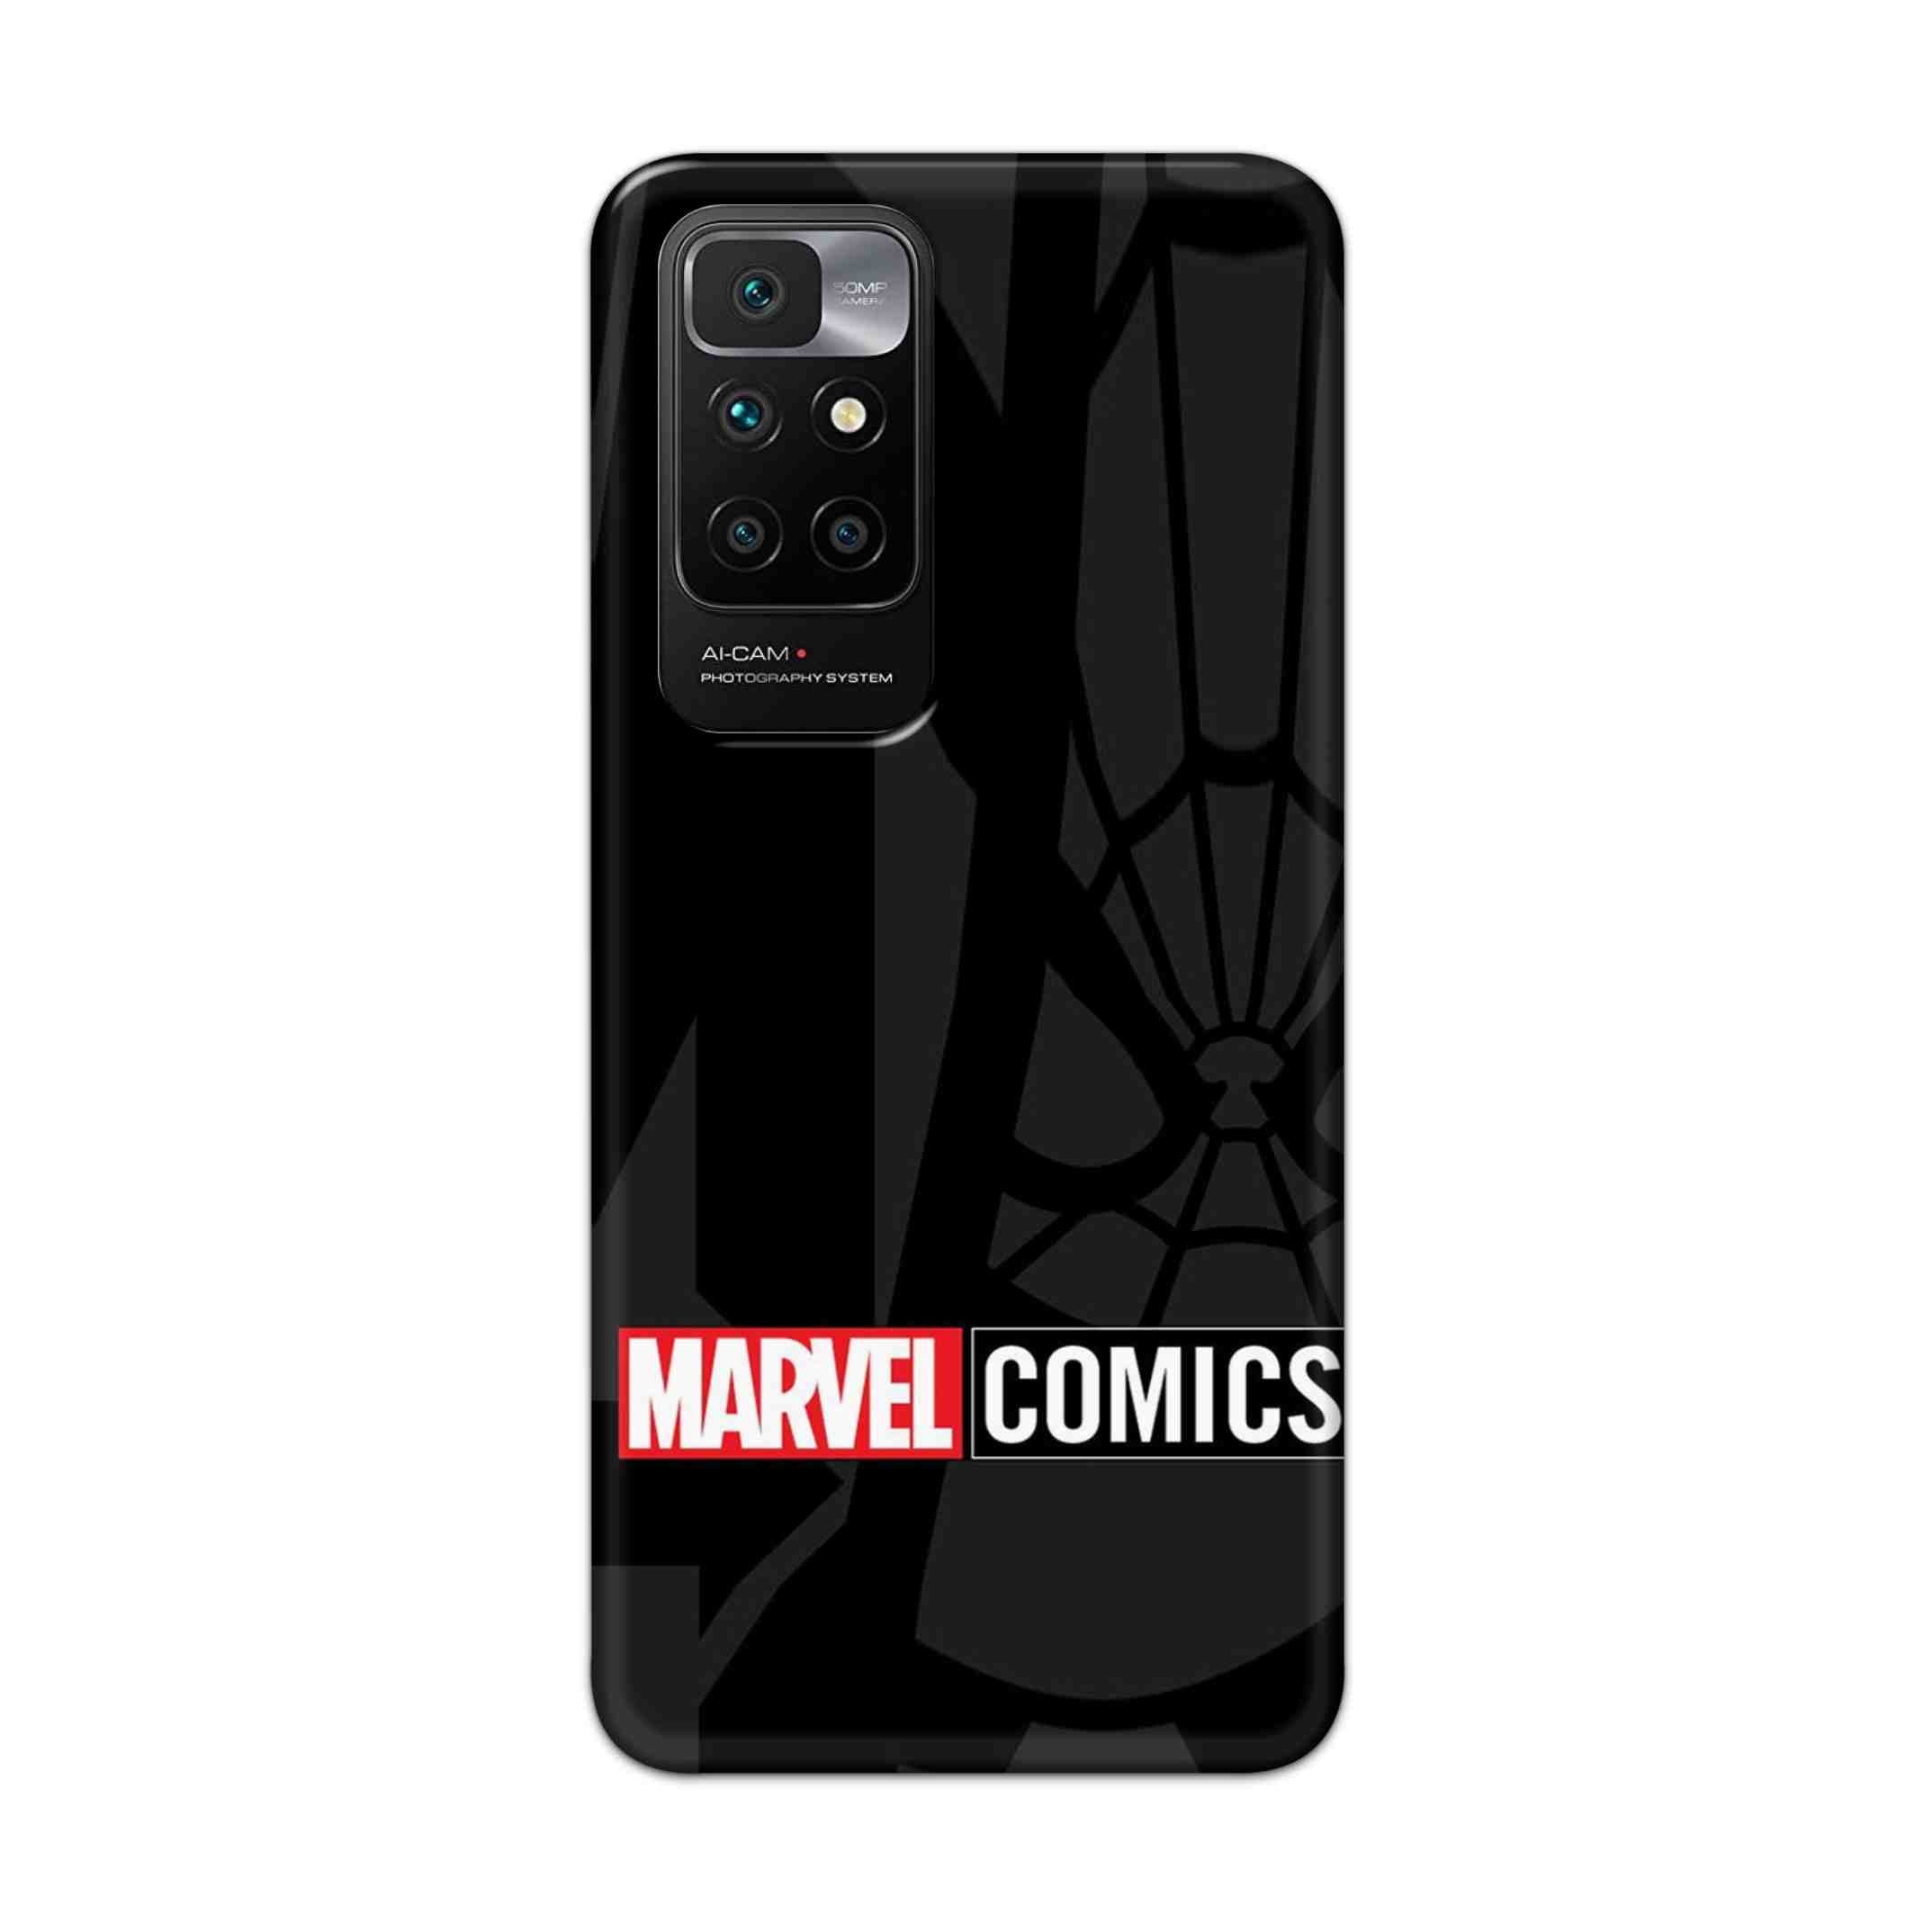 Buy Marvel Comics Hard Back Mobile Phone Case Cover For Redmi 10 Prime Online